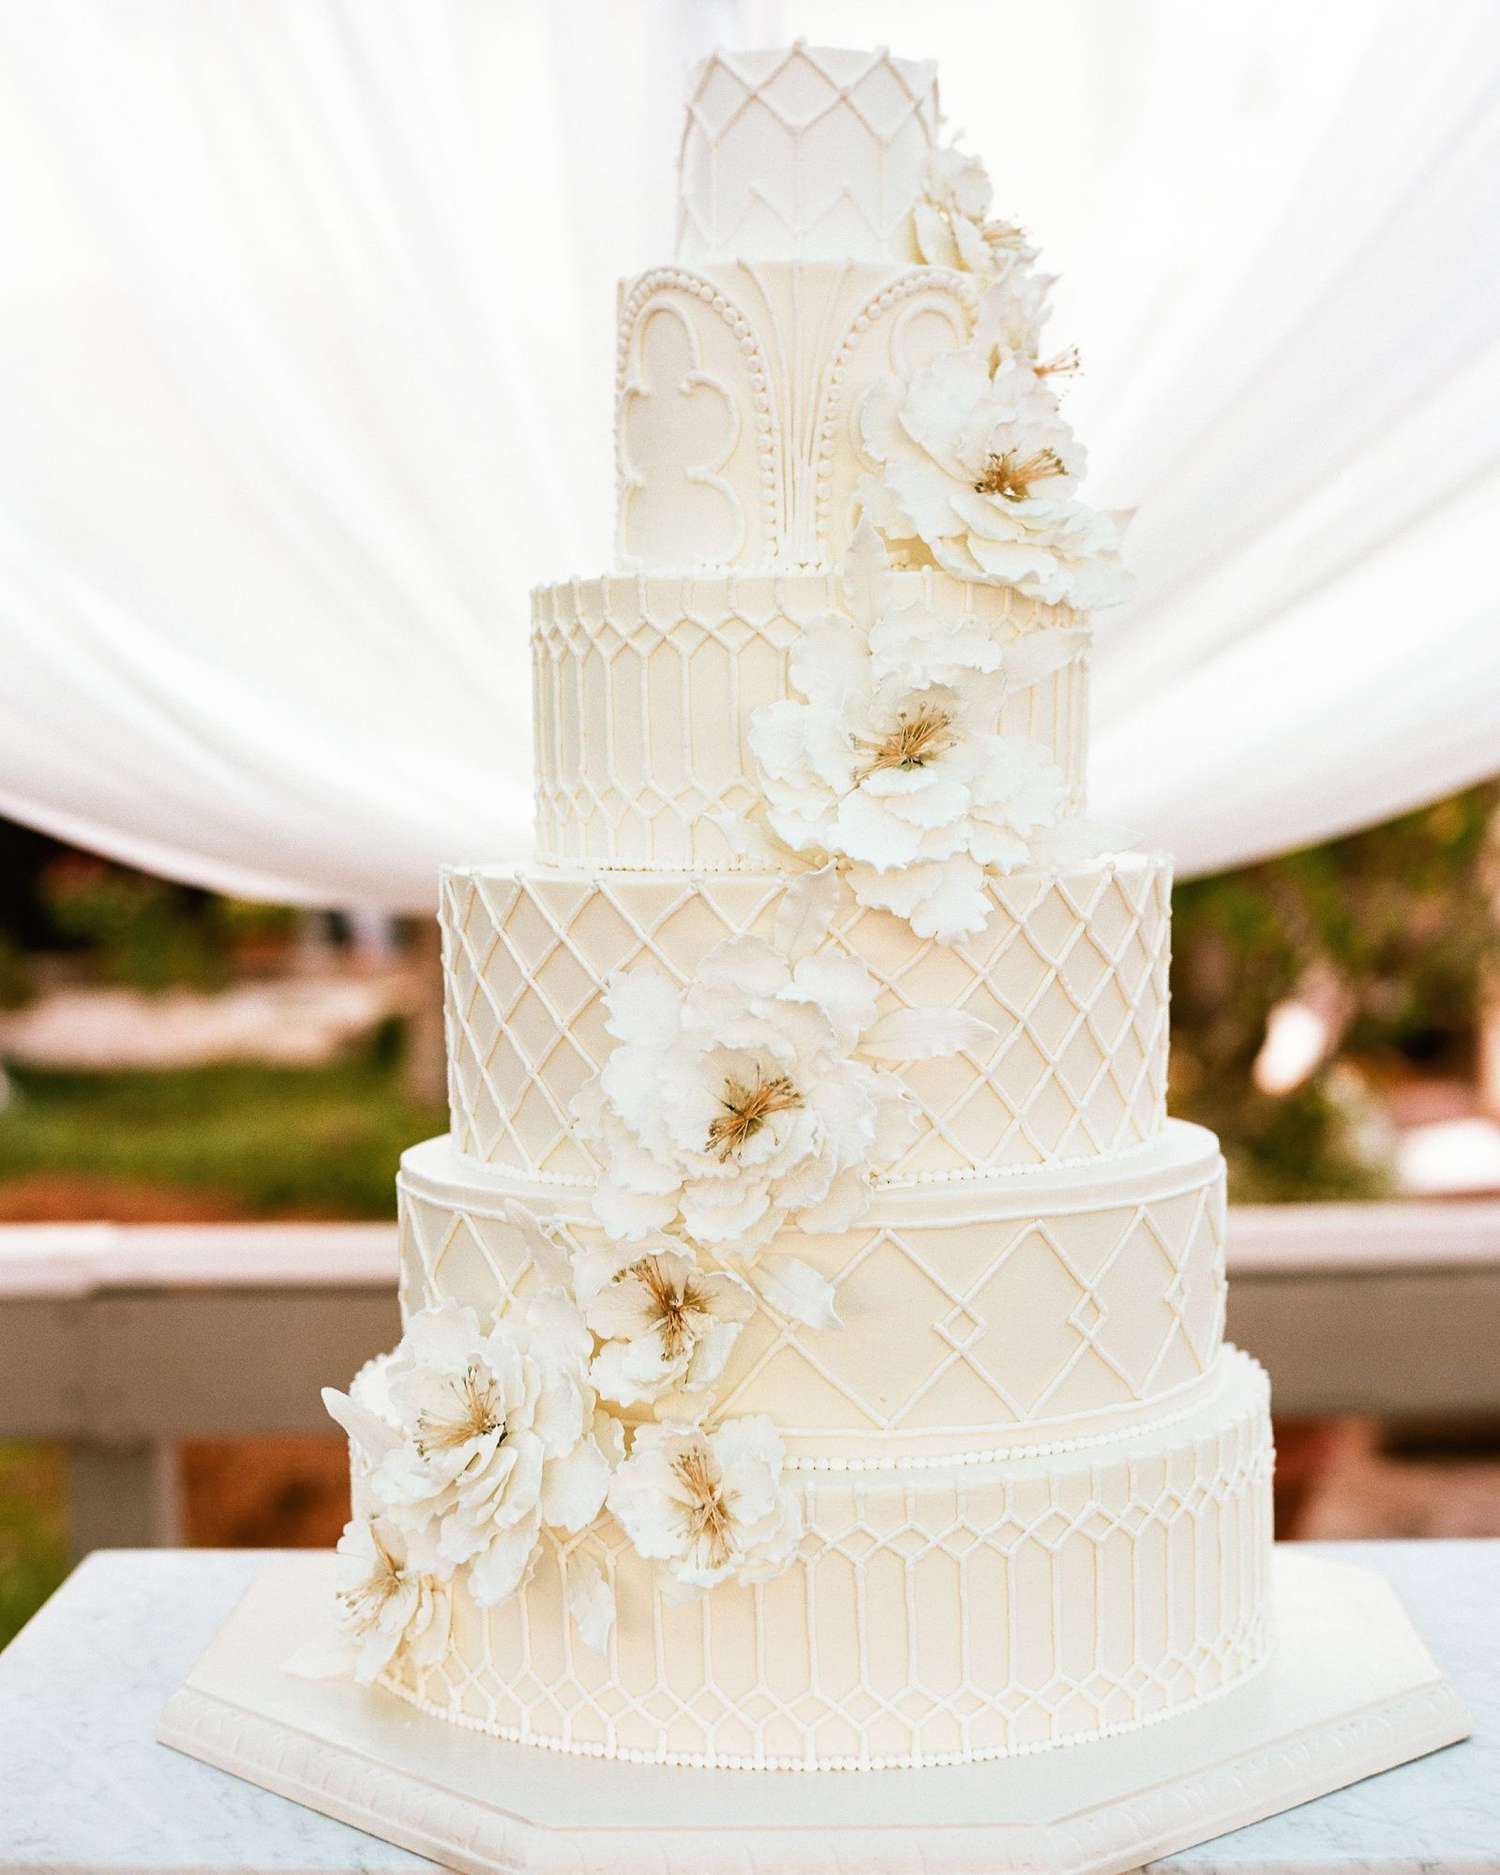 nancy-nathan-wedding-cake-1124-6141569-0816.jpg